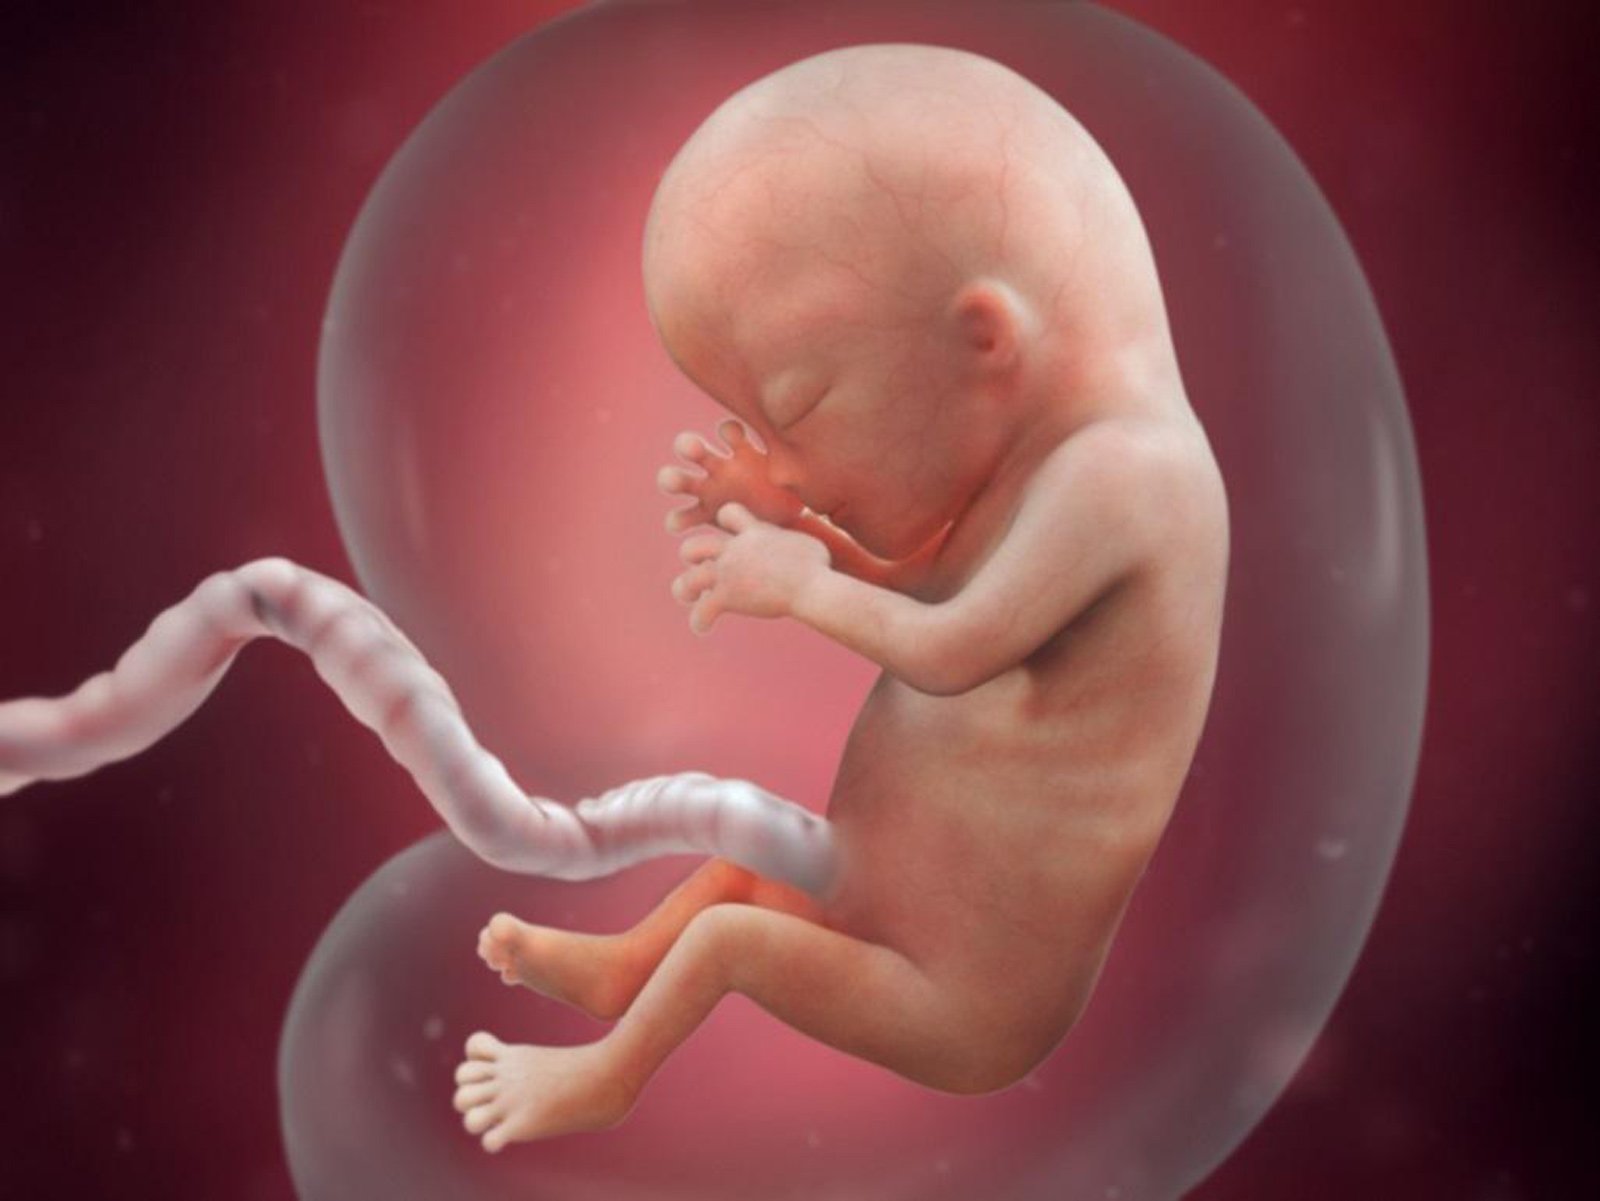 Человек в утробе матери. Эмбрион на 13 неделе беременности. 13 Недель беременности фото плода.